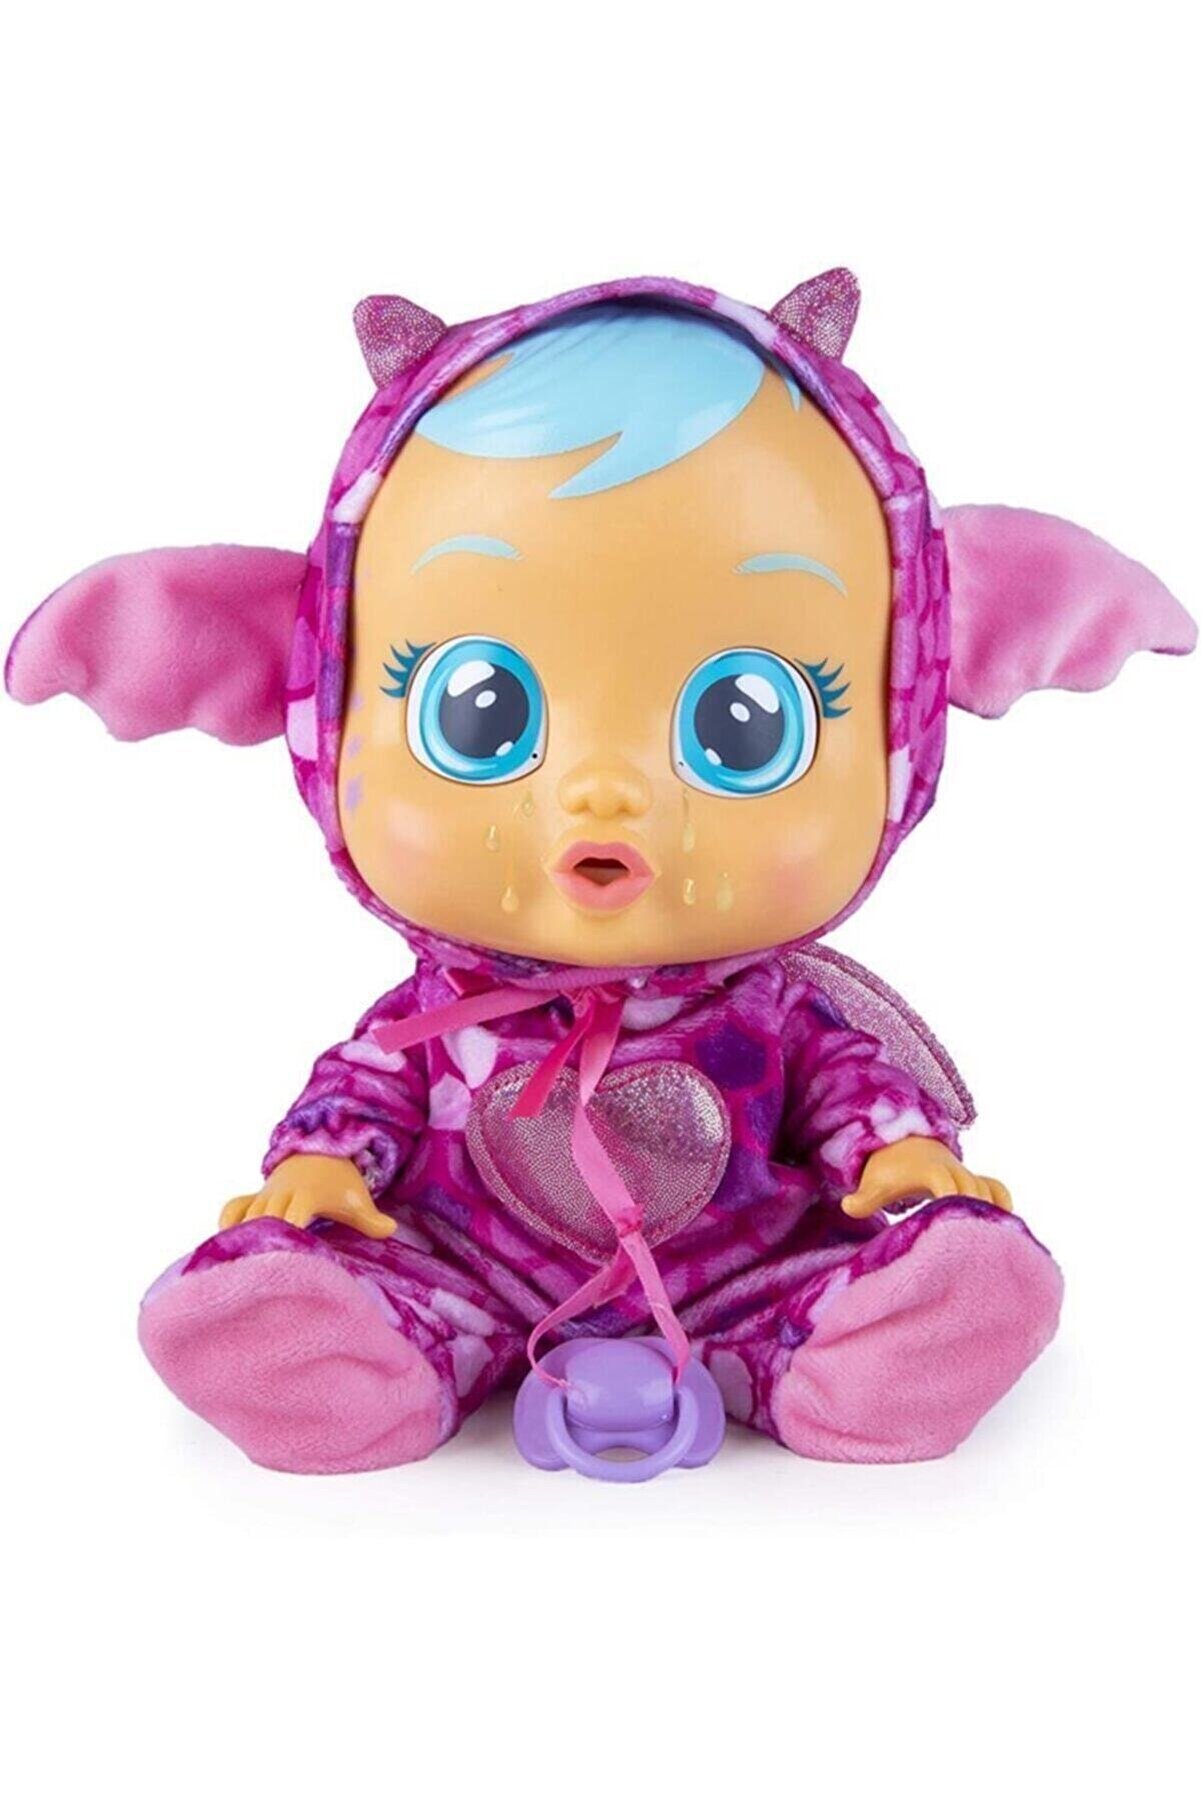 Cry Babies Fantasy Bebek Bruny 99197 Cyb09000